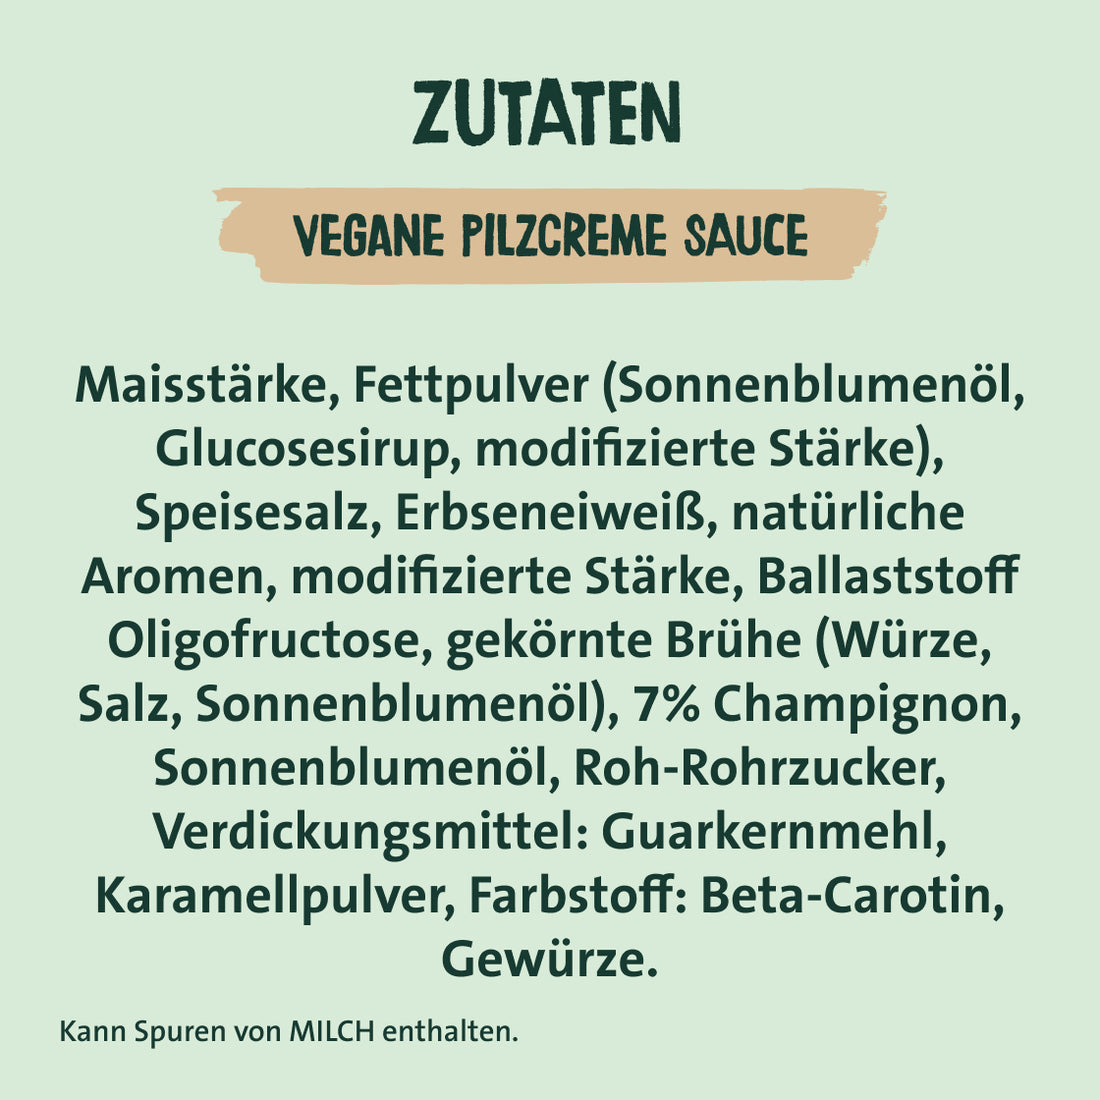 Vegane Pilzcreme Sauce